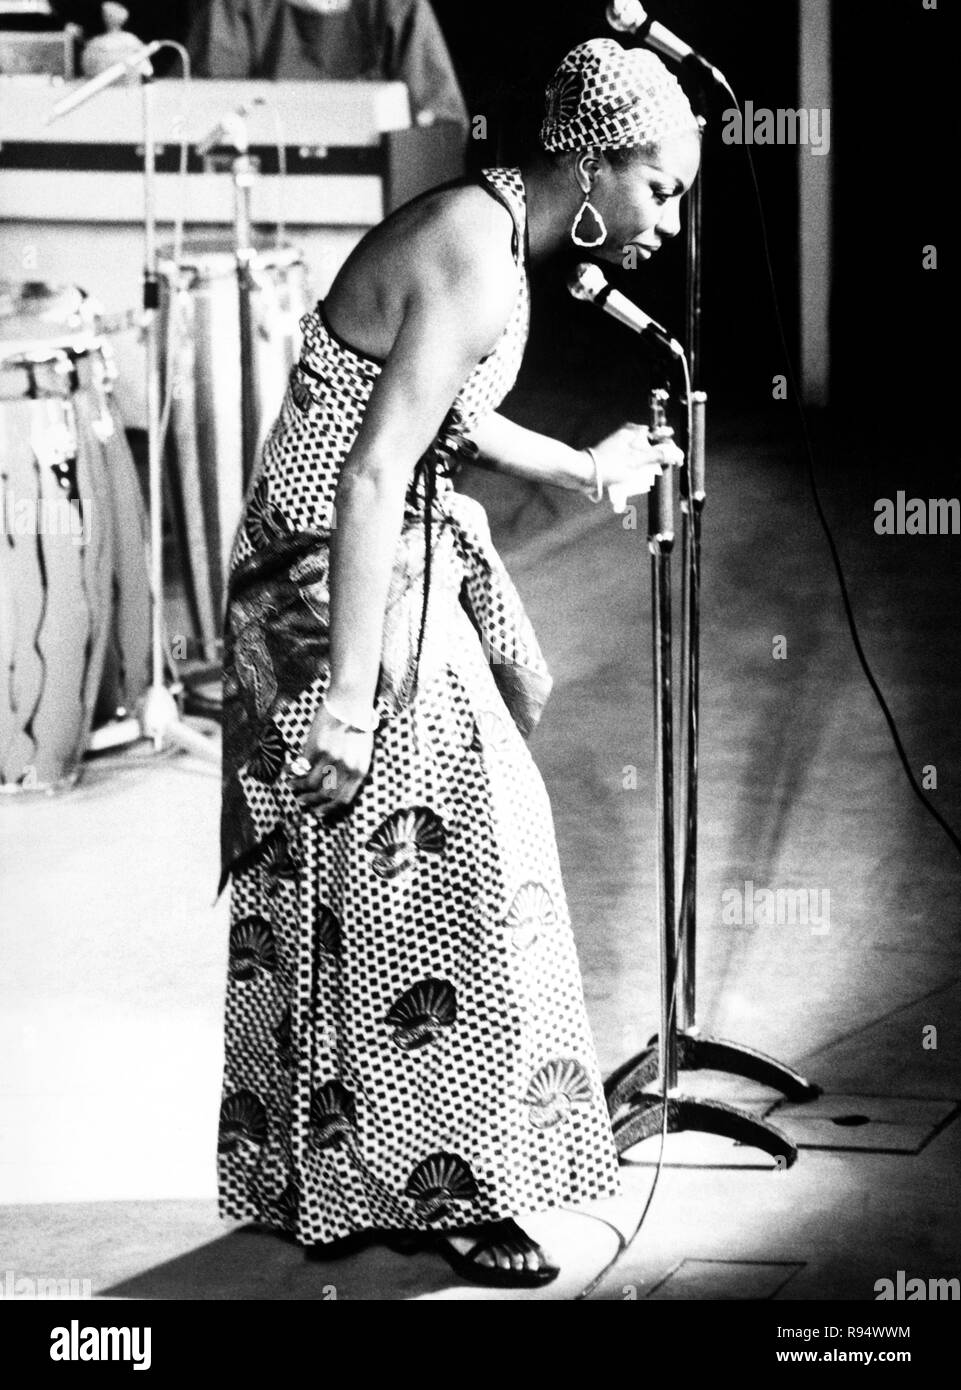 Nina Simone, 1977 Stockfotografie - Alamy